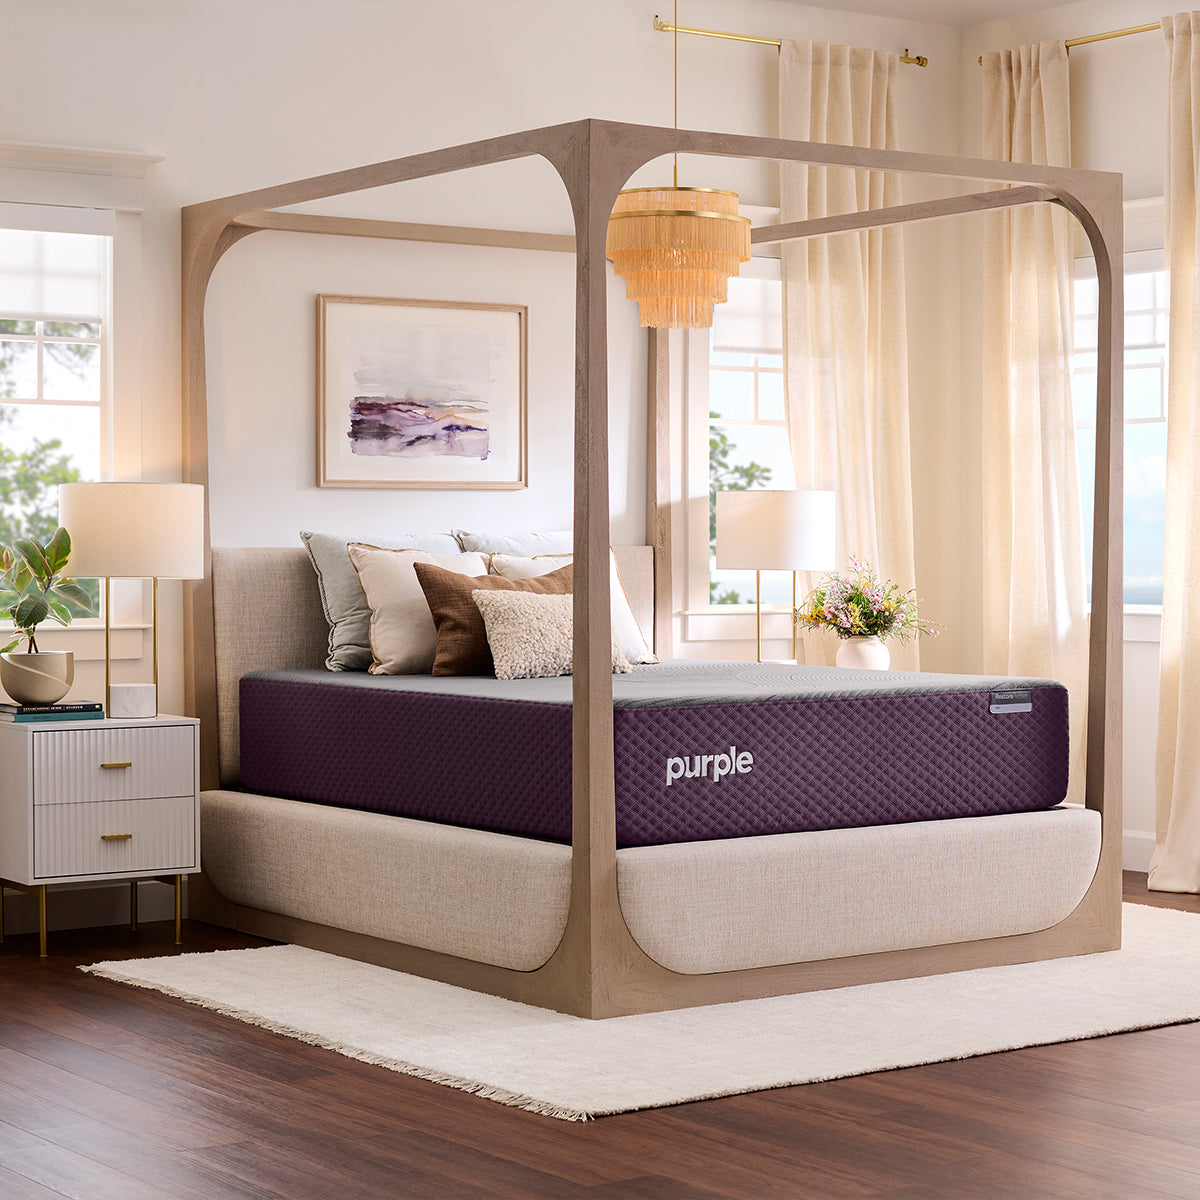 Purple Restore Premier Firm Mattress in bedroom